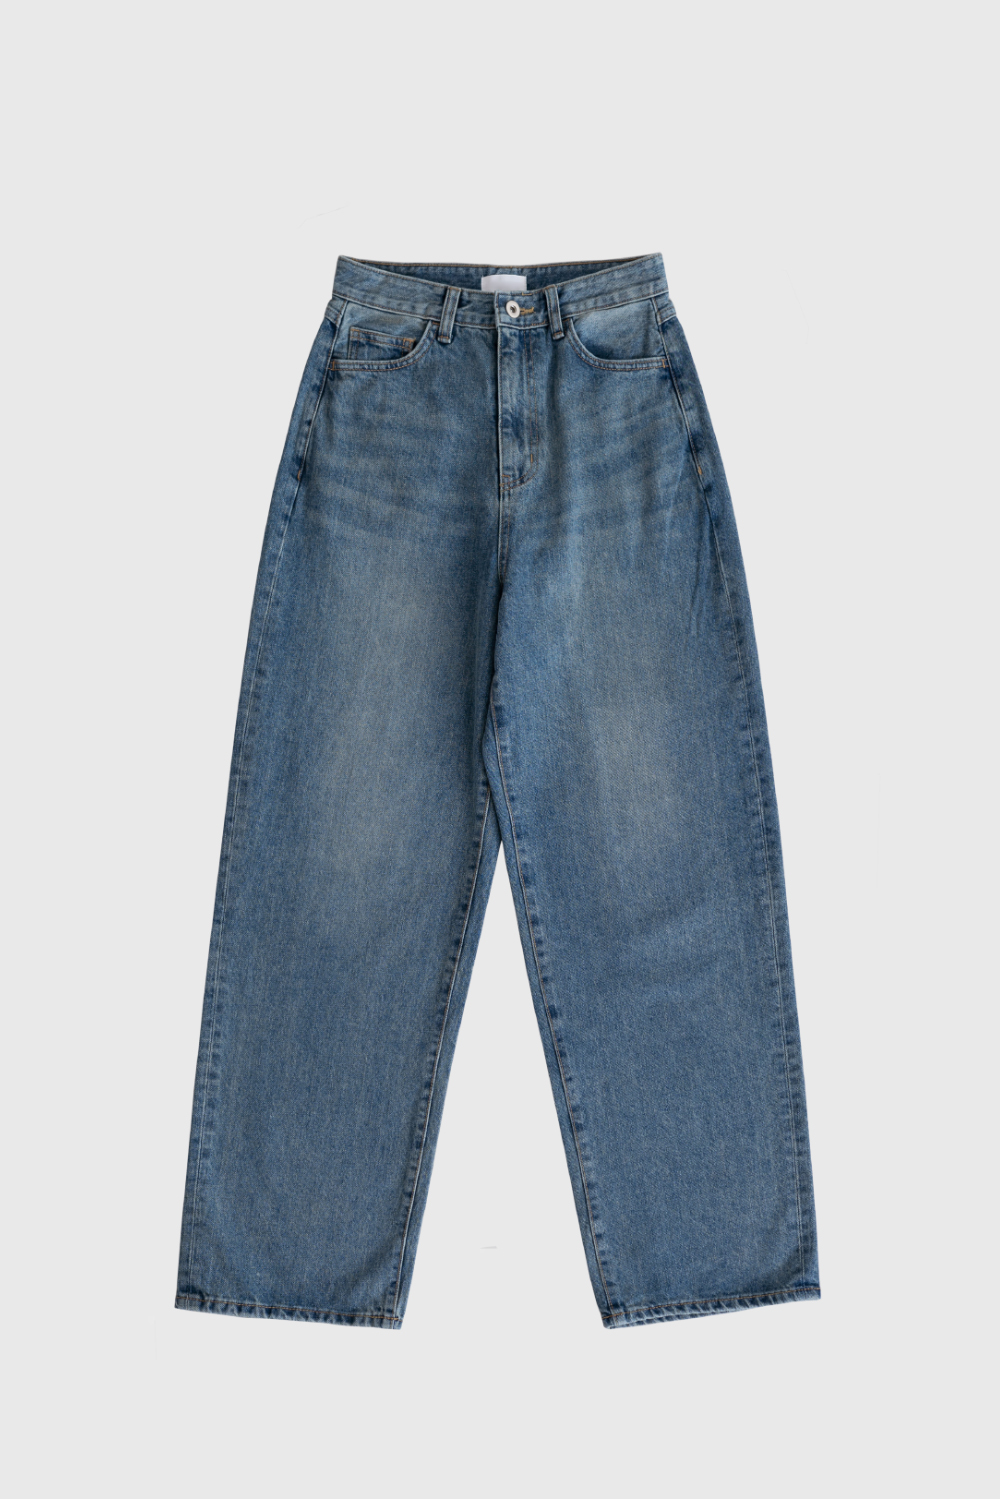 17480_Devi Jeans